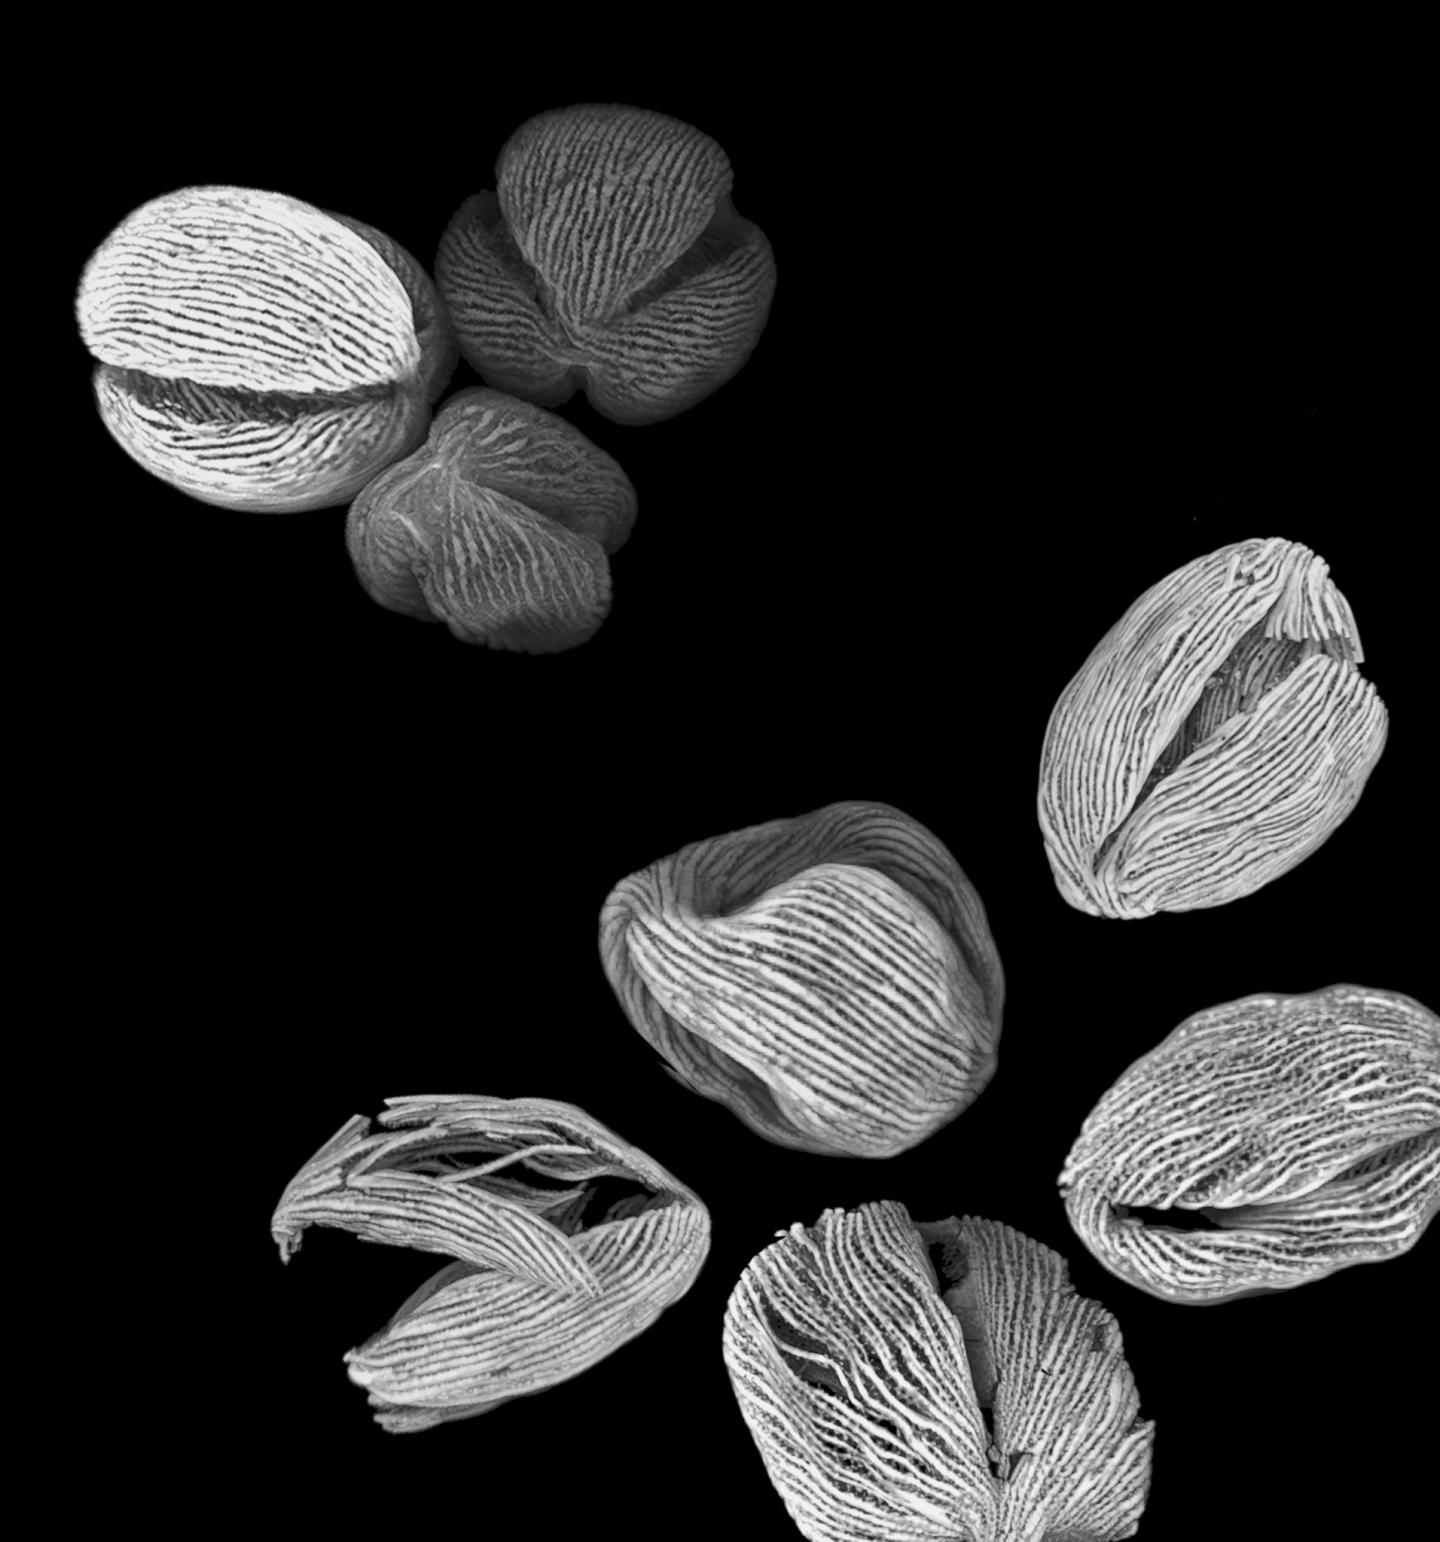 Airyscan Microscopy Image Of Pollen Grains